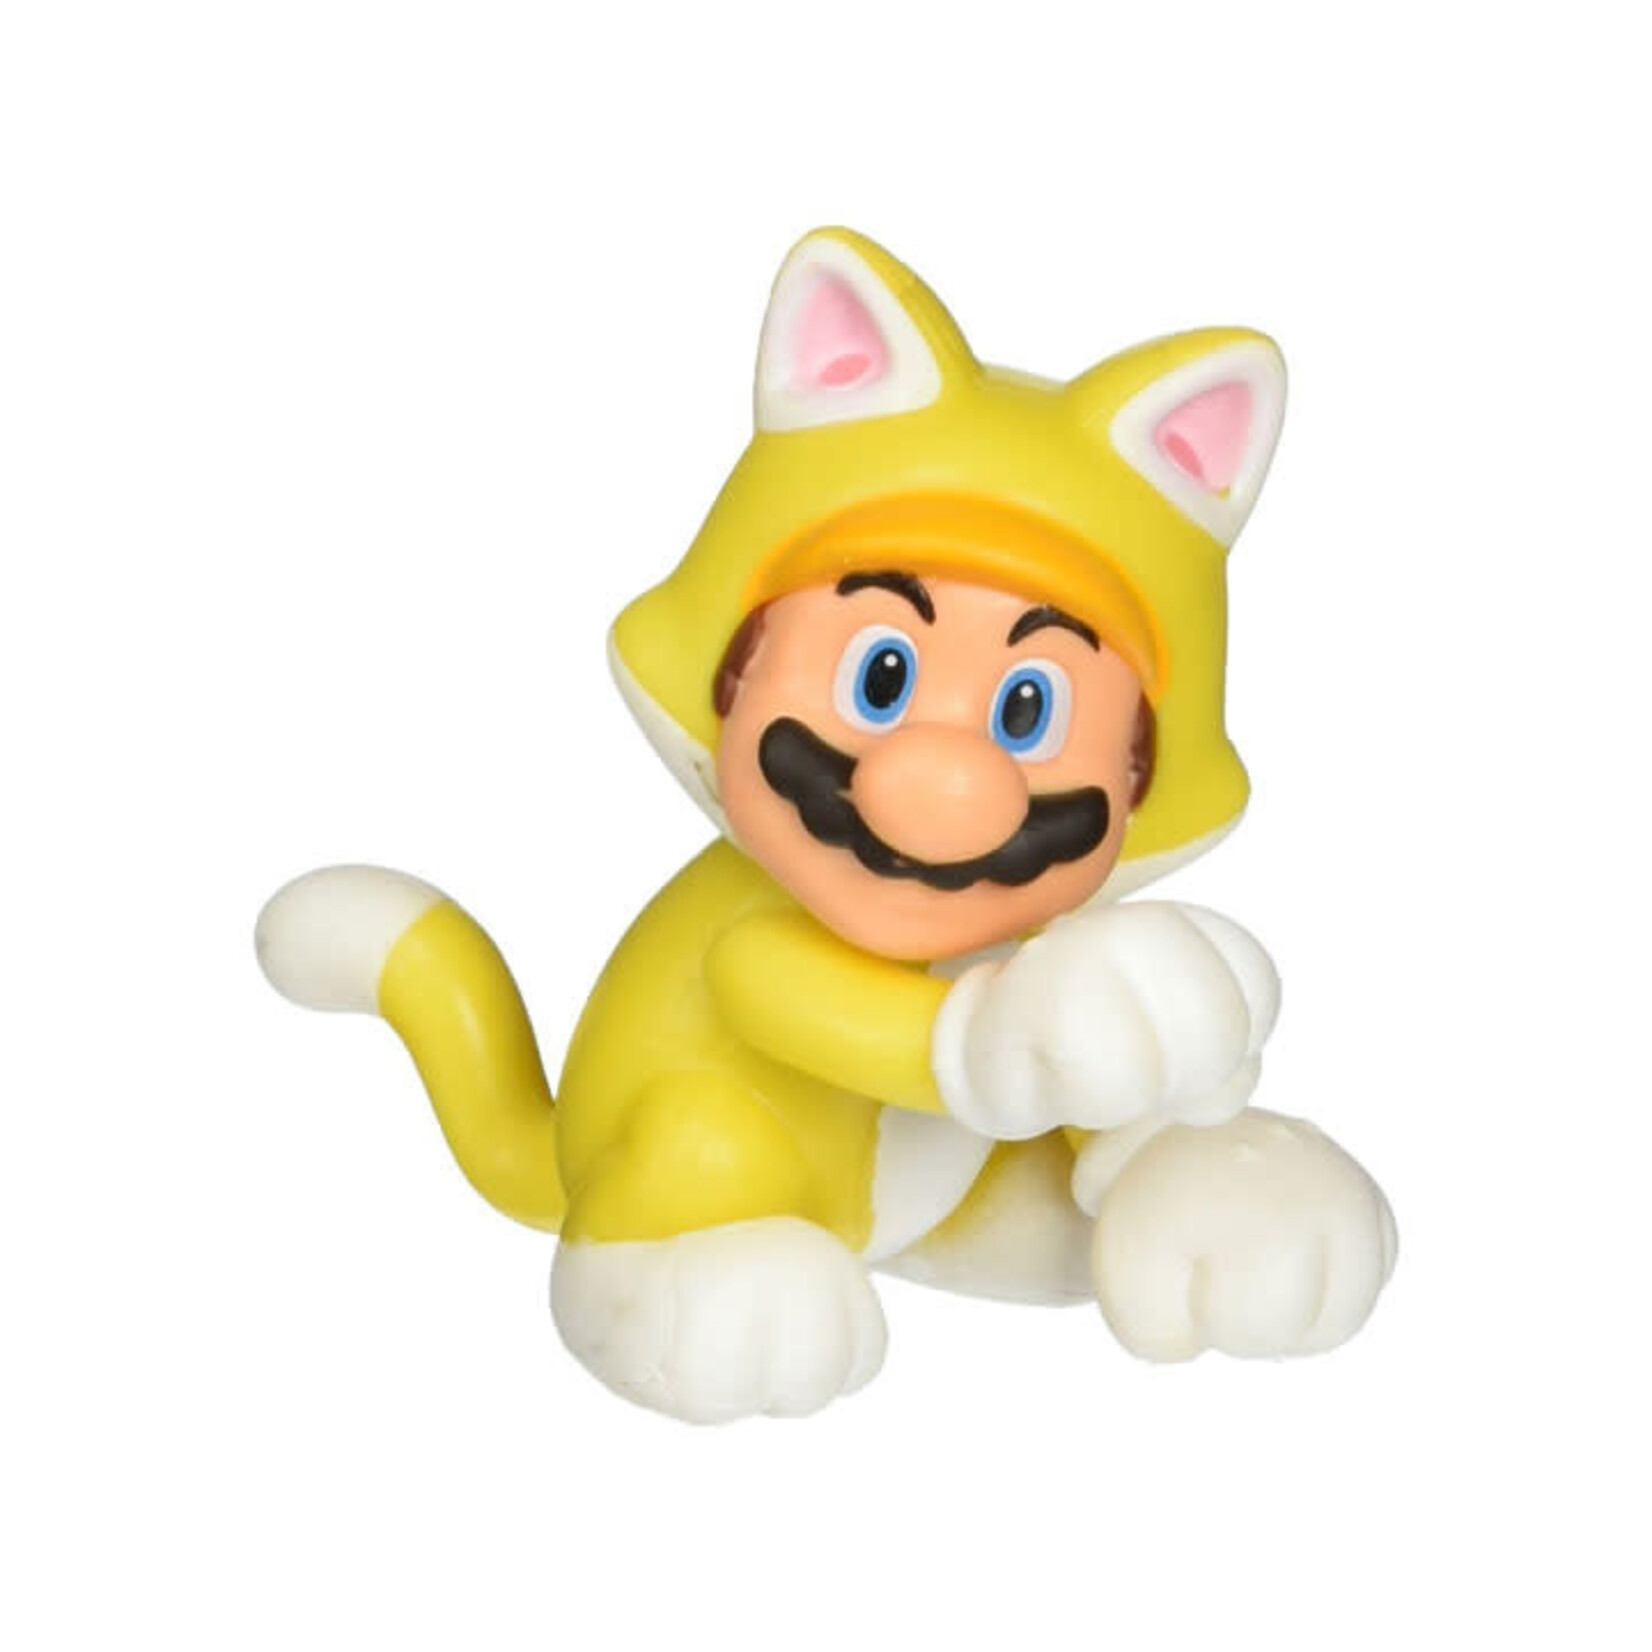 FIGURE-World of Nintendo Cat Mario